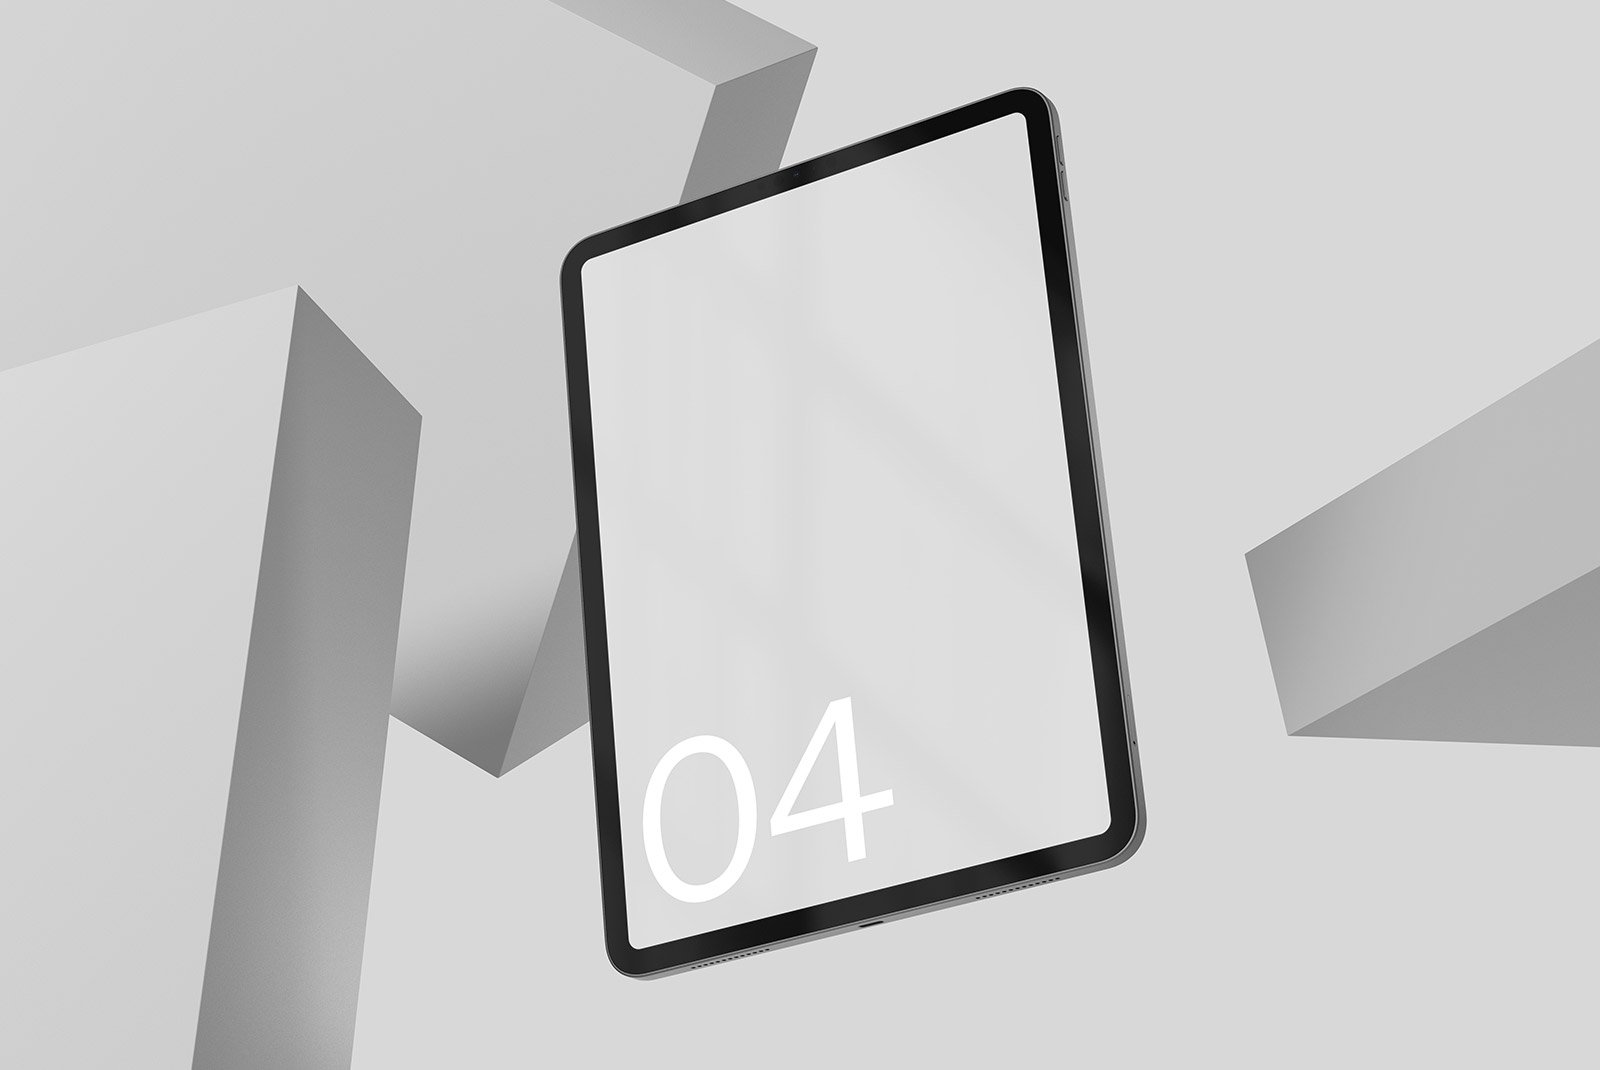 iPad Pro 04 Standard Mockup preview image.